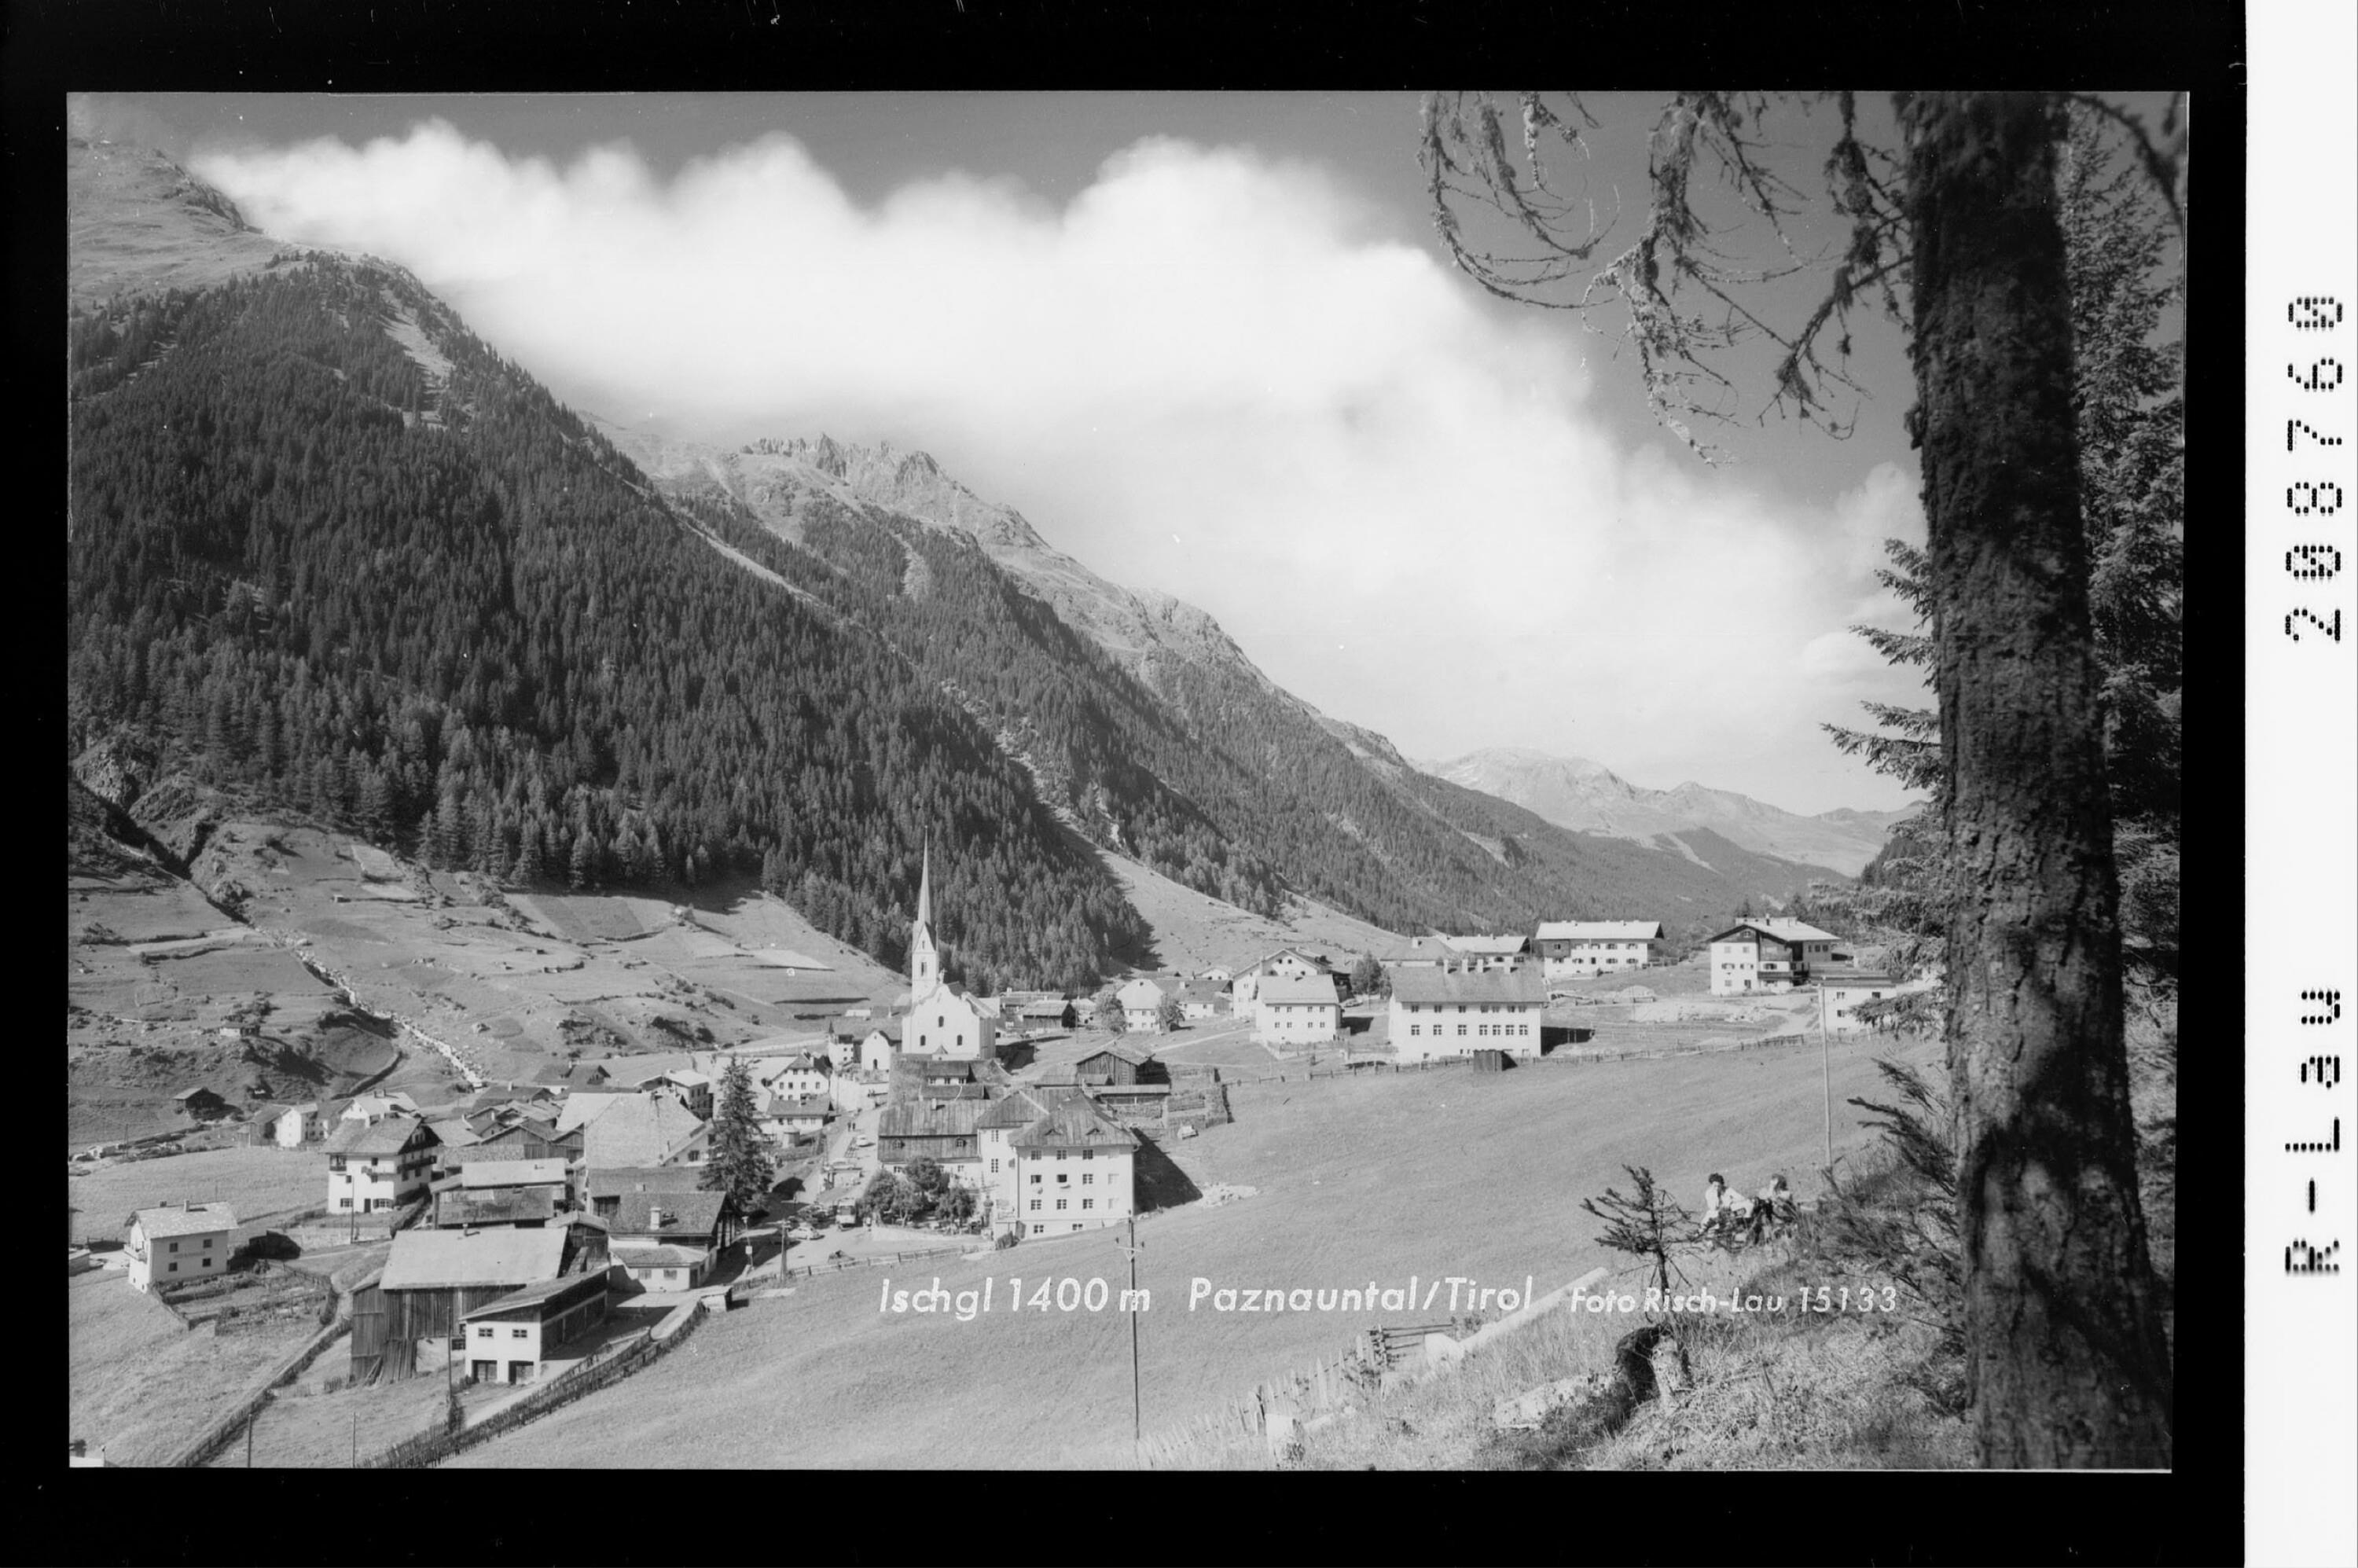 Ischgl 1400 m Paznauntal, Tirol></div>


    <hr>
    <div class=